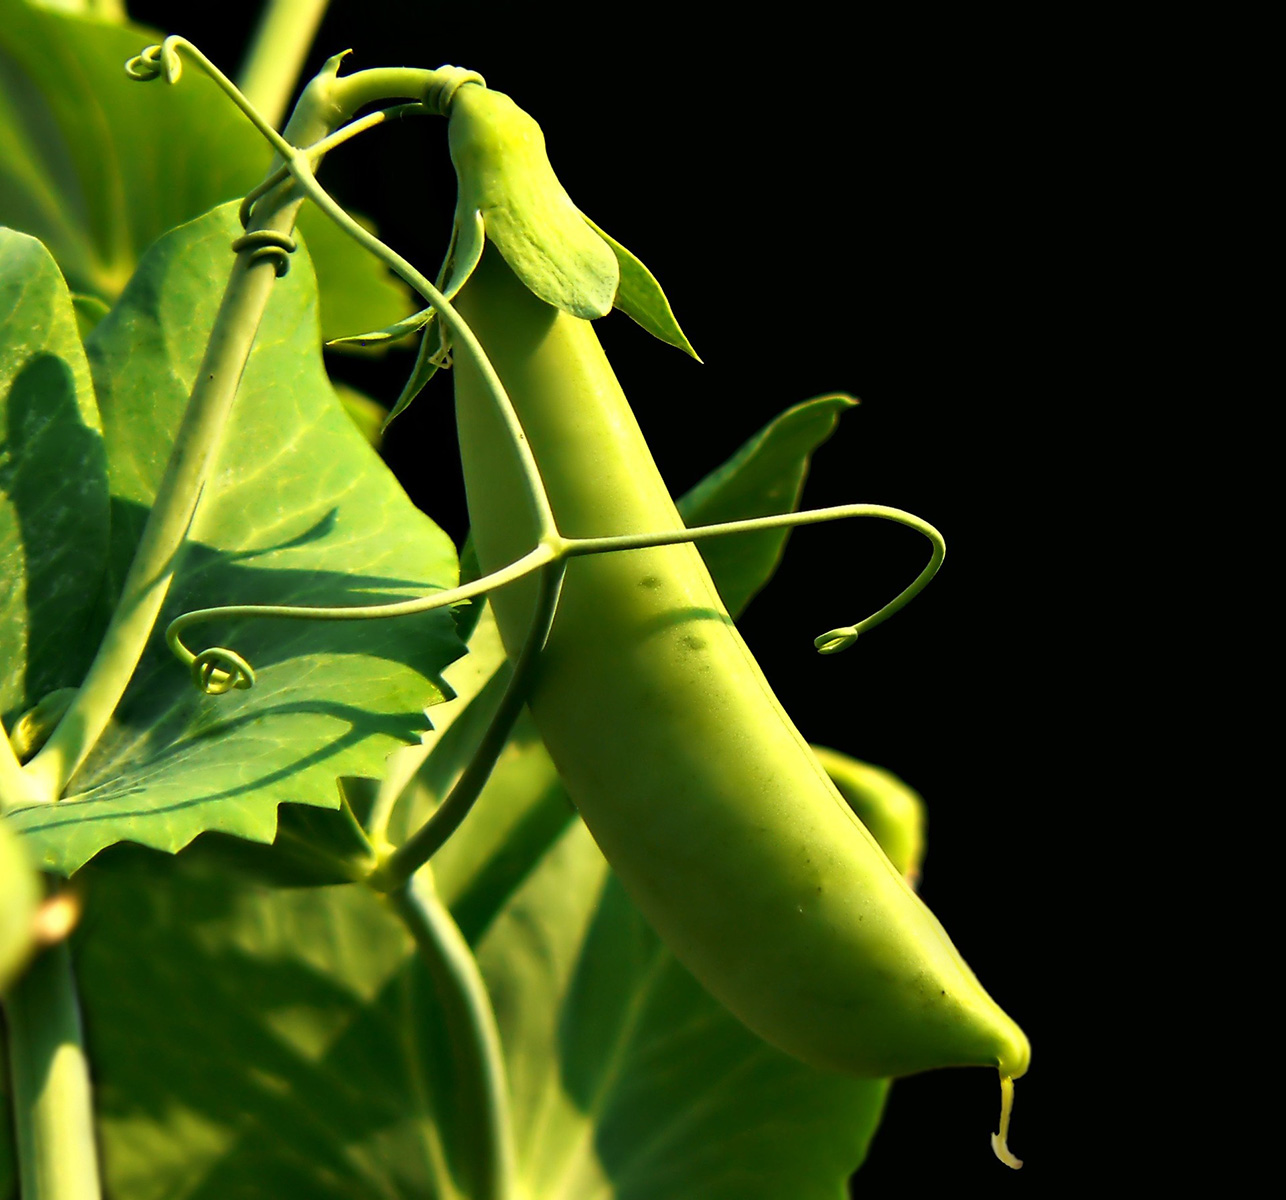 Picture of garden peas. 